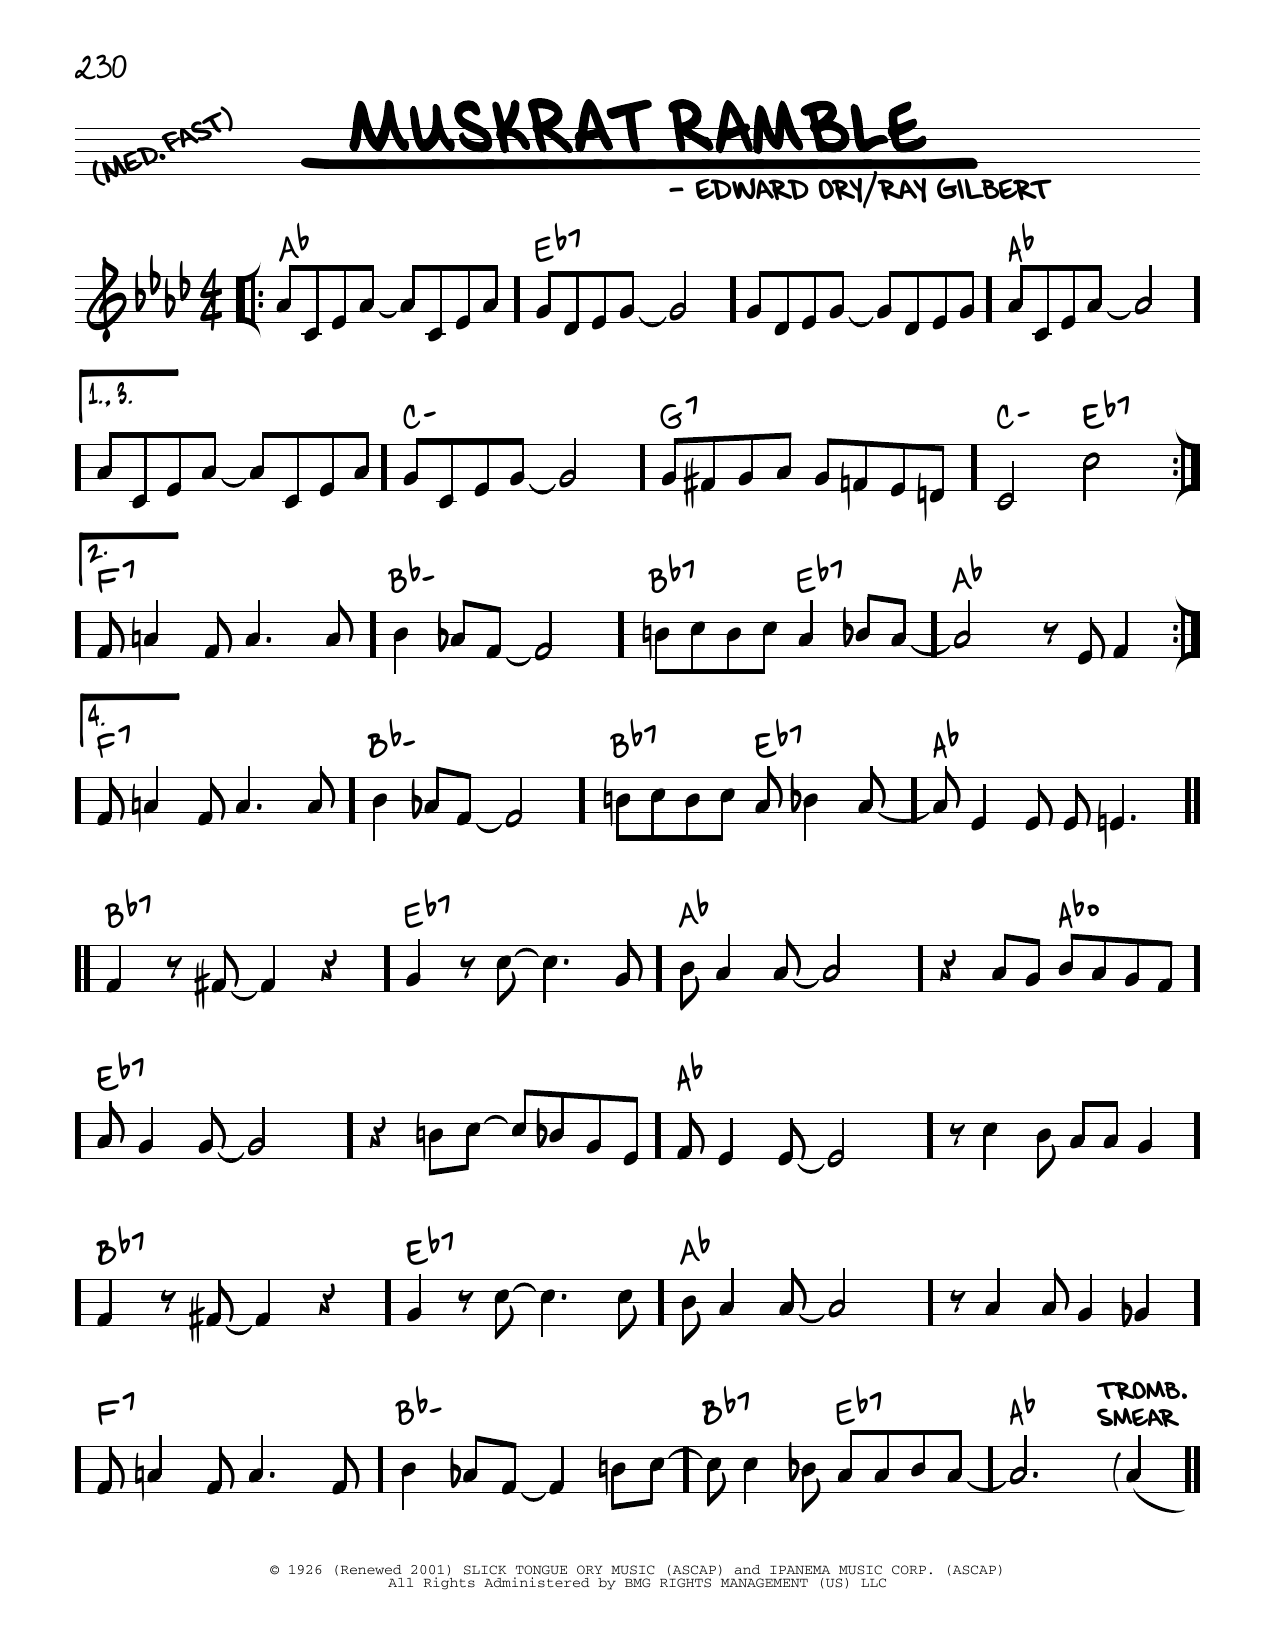 Louis Armstrong Muskrat Ramble (arr. Robert Rawlins) Sheet Music Notes & Chords for Real Book – Melody, Lyrics & Chords - Download or Print PDF